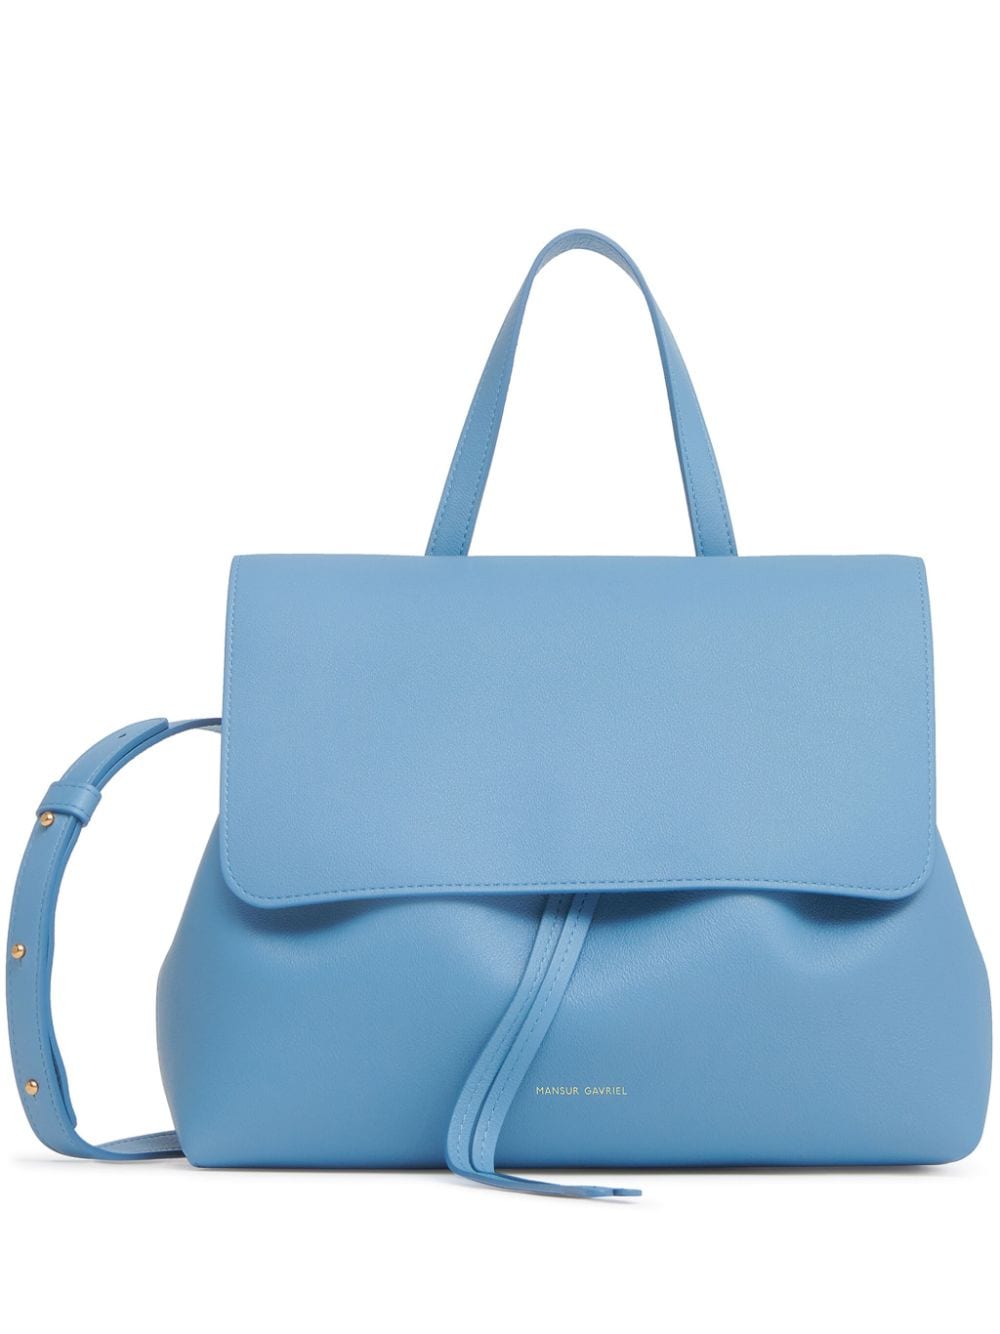 Mansur Gavriel soft Lady leather bag - Blue von Mansur Gavriel